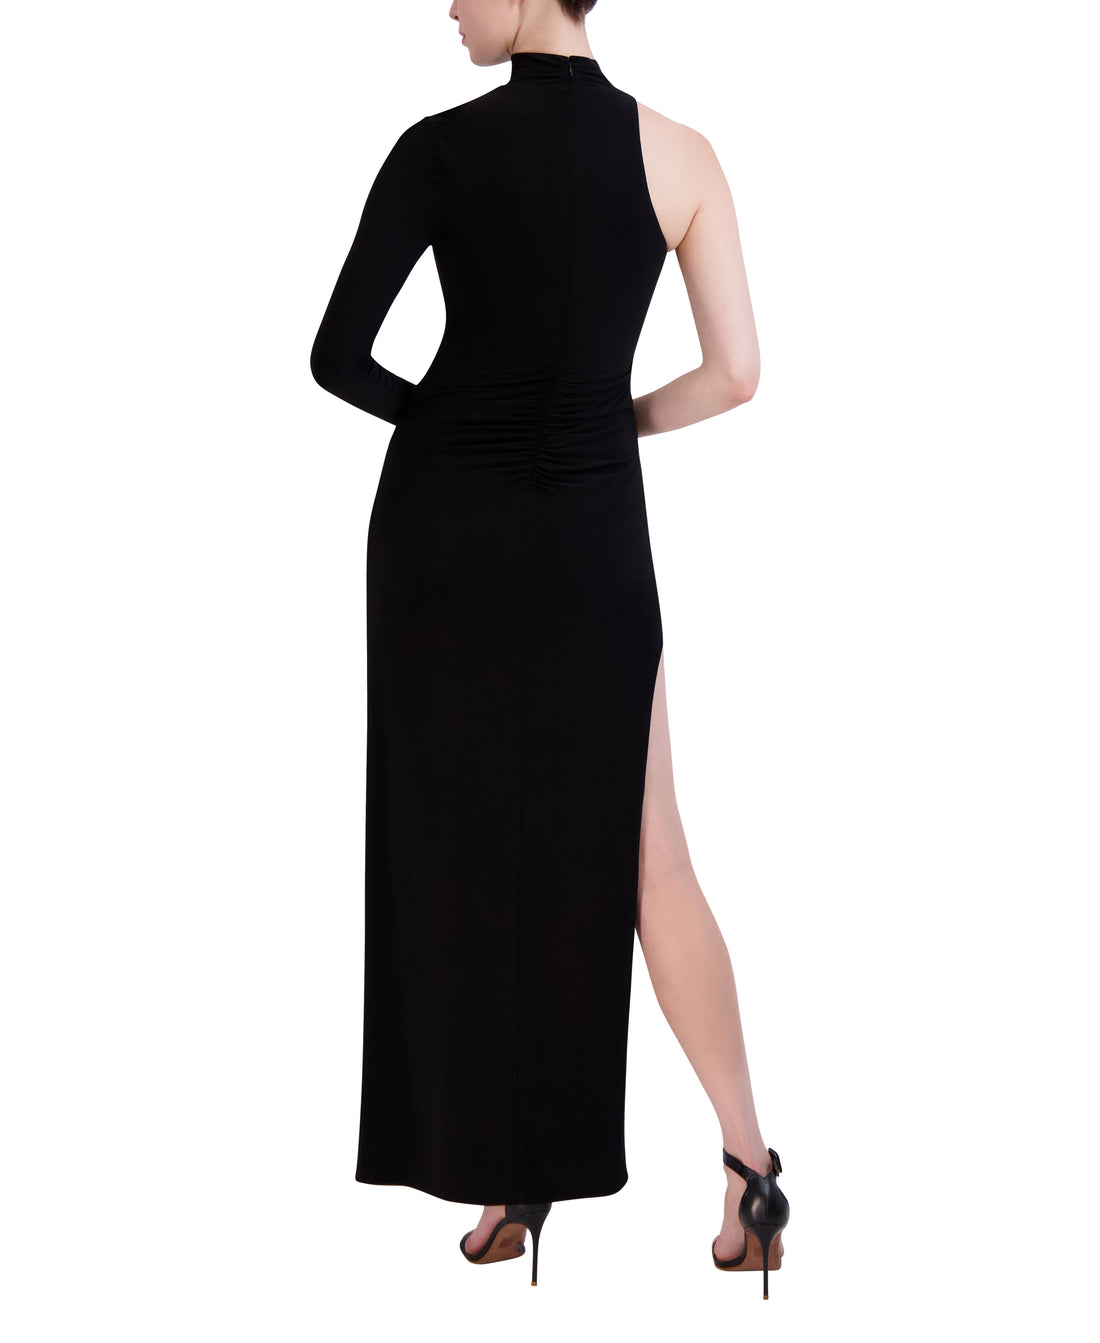 Black Long Evening Dress With Thigh High Slit